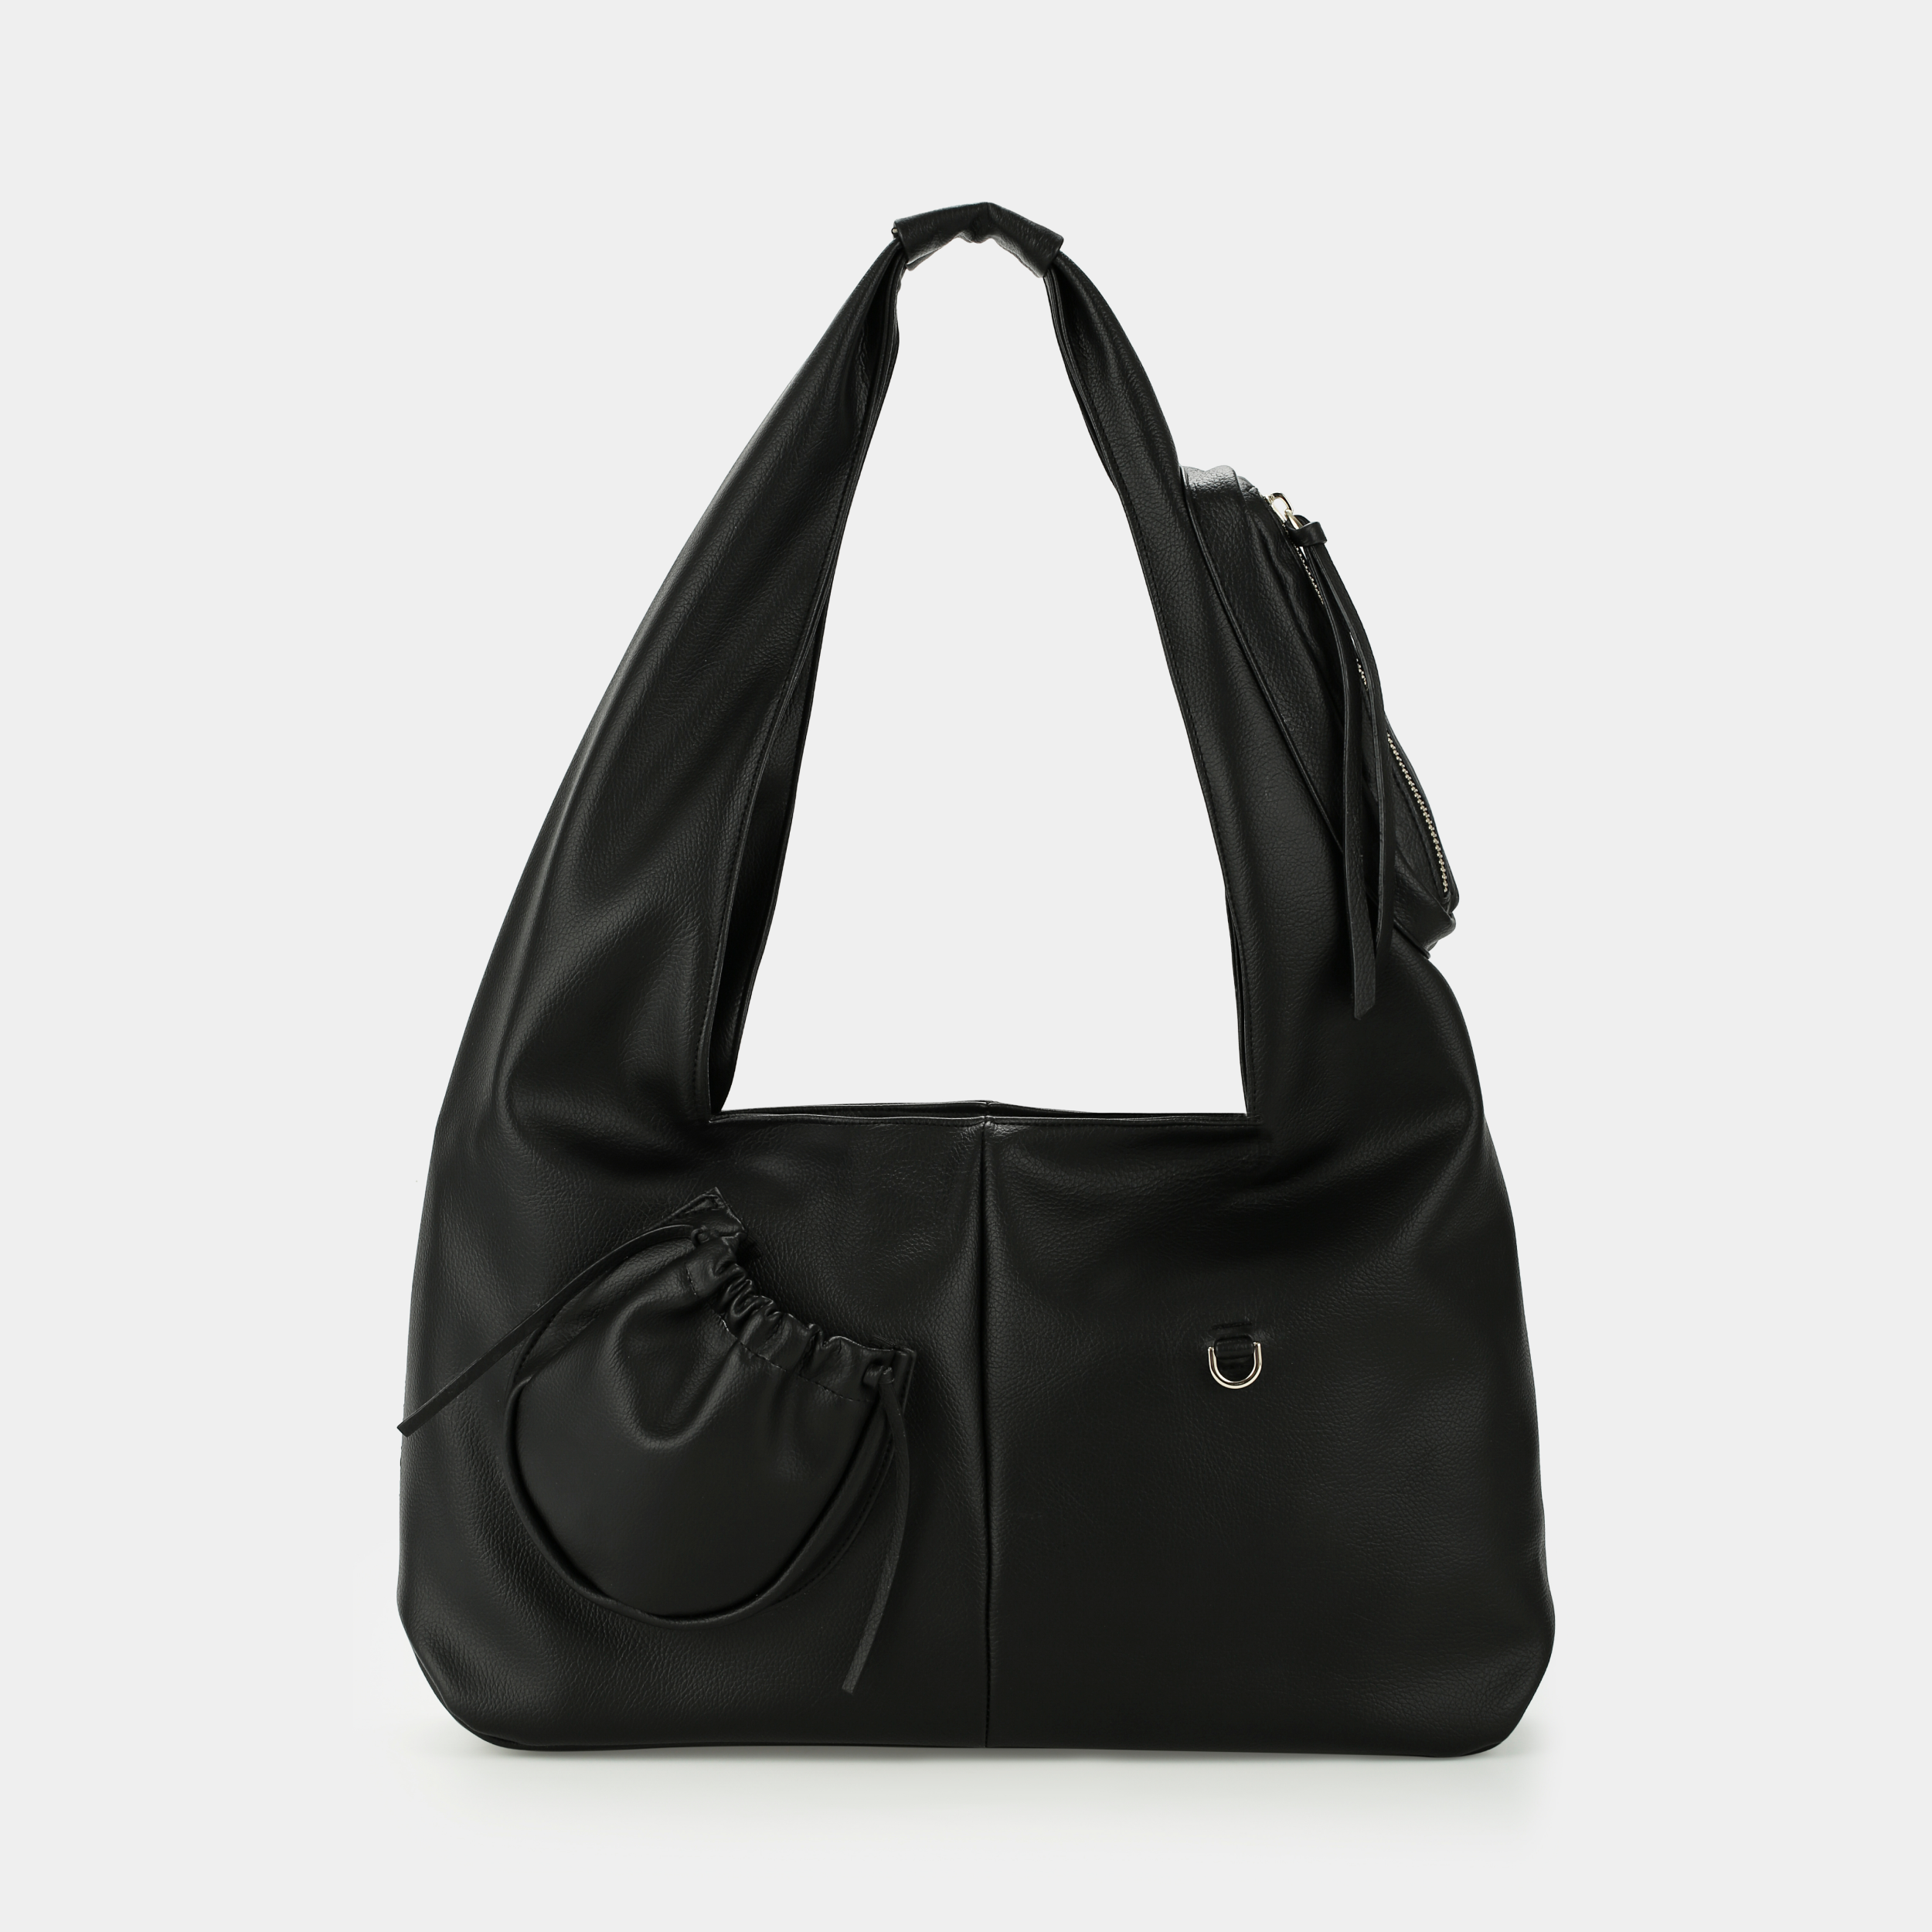 Túi xách Hobo C2-Pocket size Laptop (L) màu đen